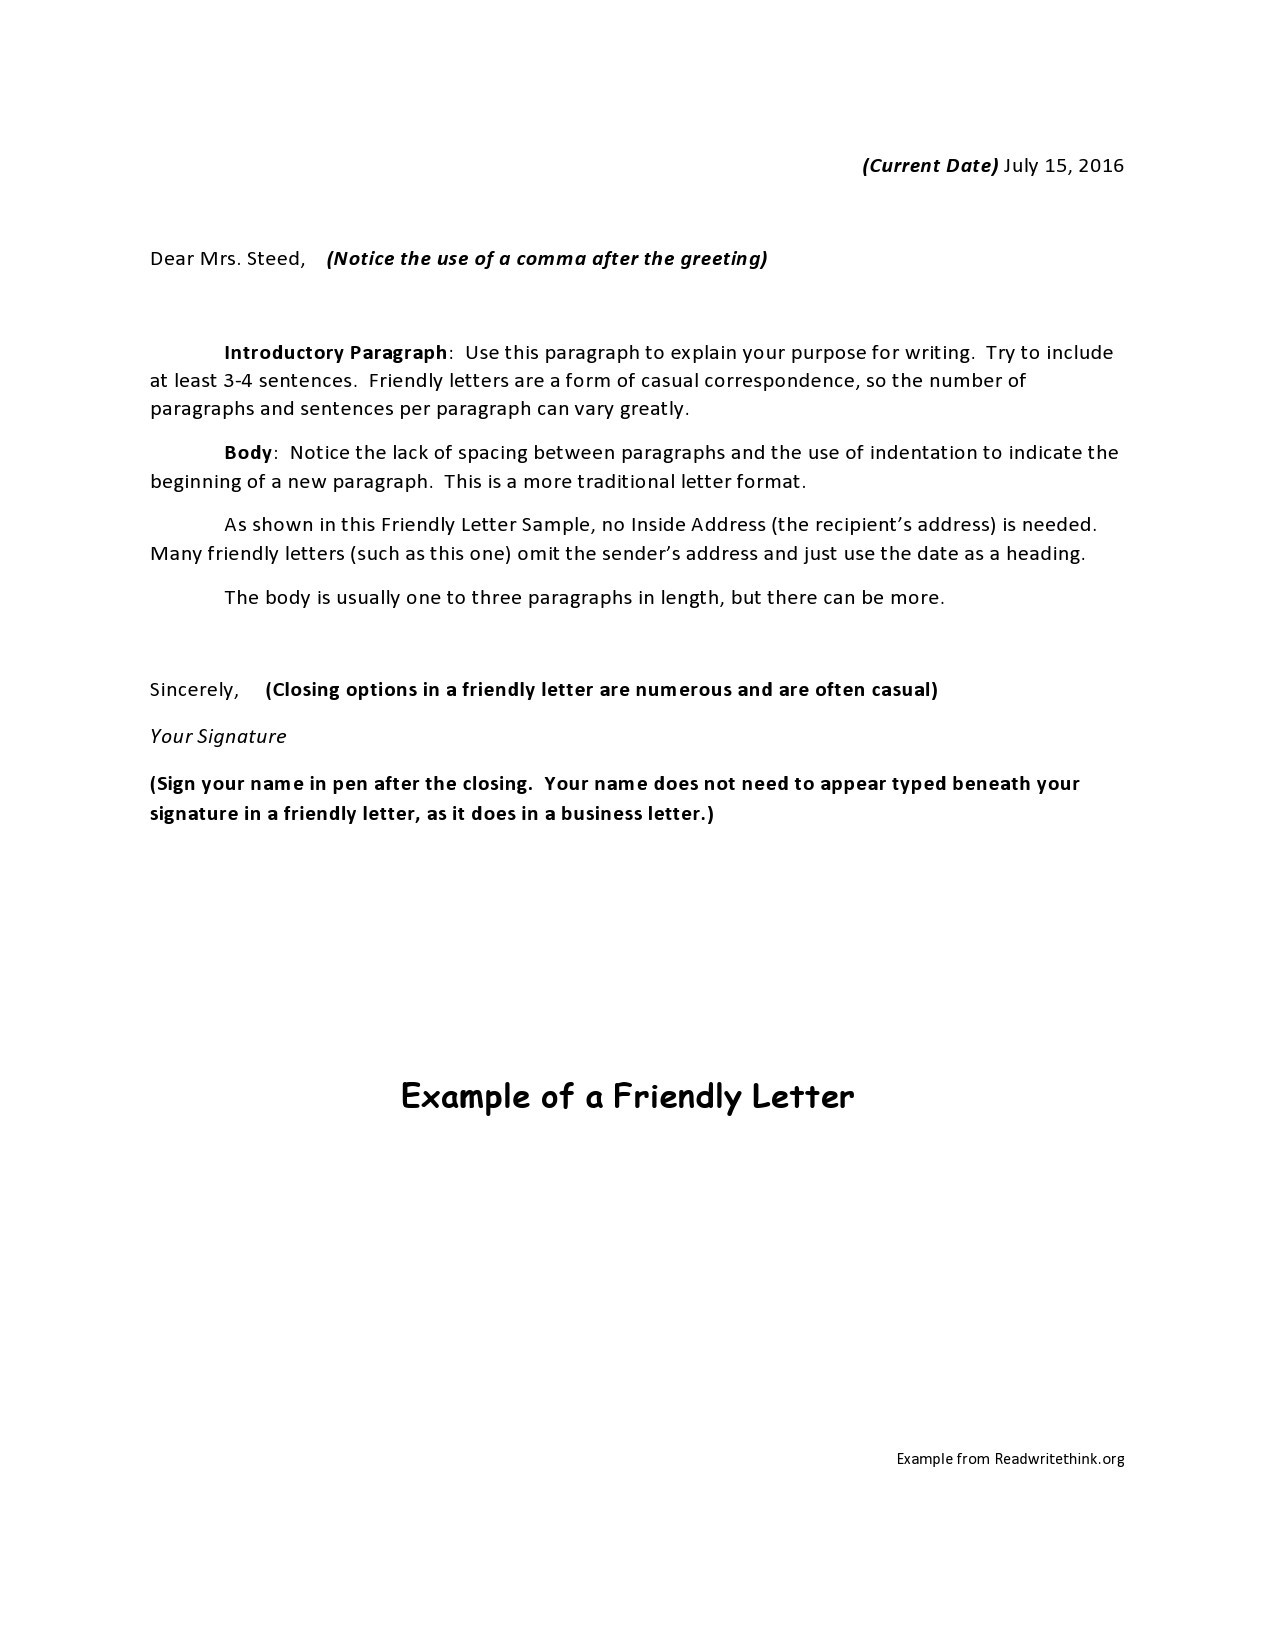 Free friendly letter format 40